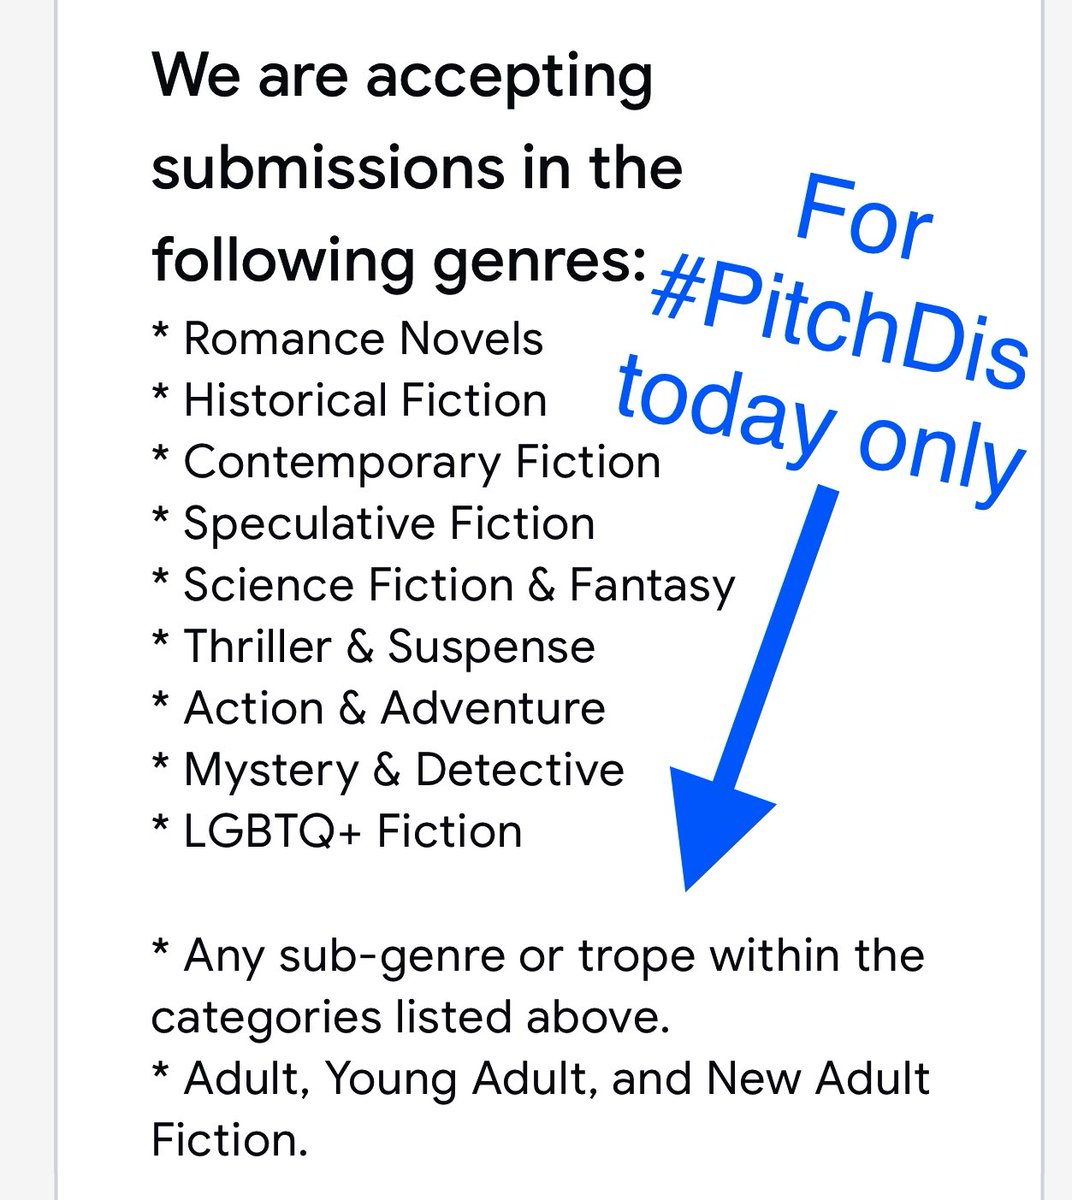 #PitchDis Photo,#PitchDis Photo by Eric, book publisher 📚,Eric, book publisher 📚 on twitter tweets #PitchDis Photo